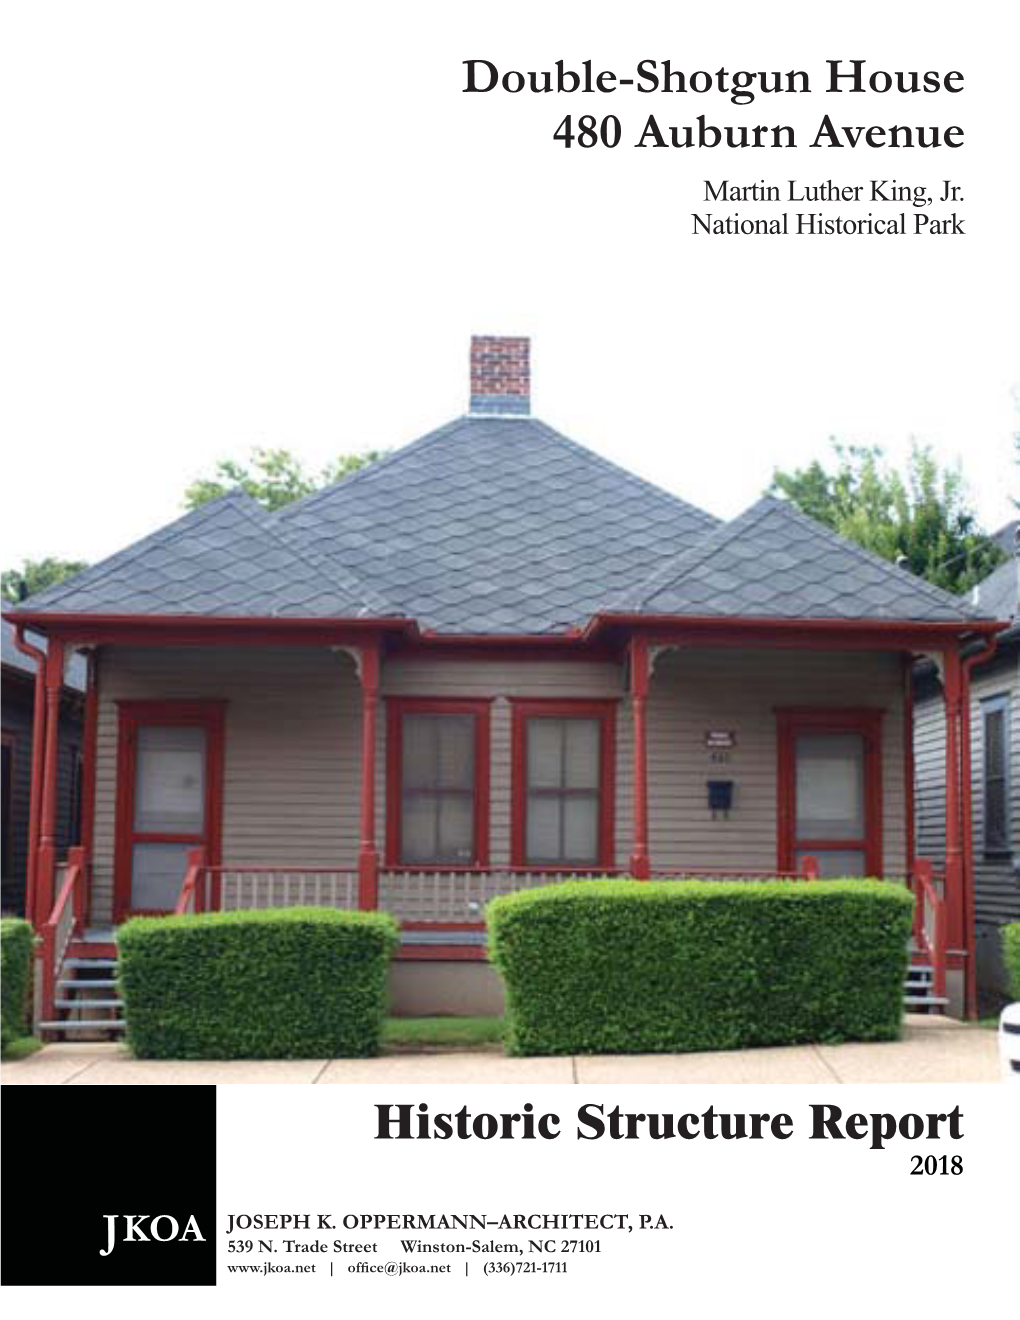 Double-Shotgun House 480 Auburn Avenue Historic Structure Report